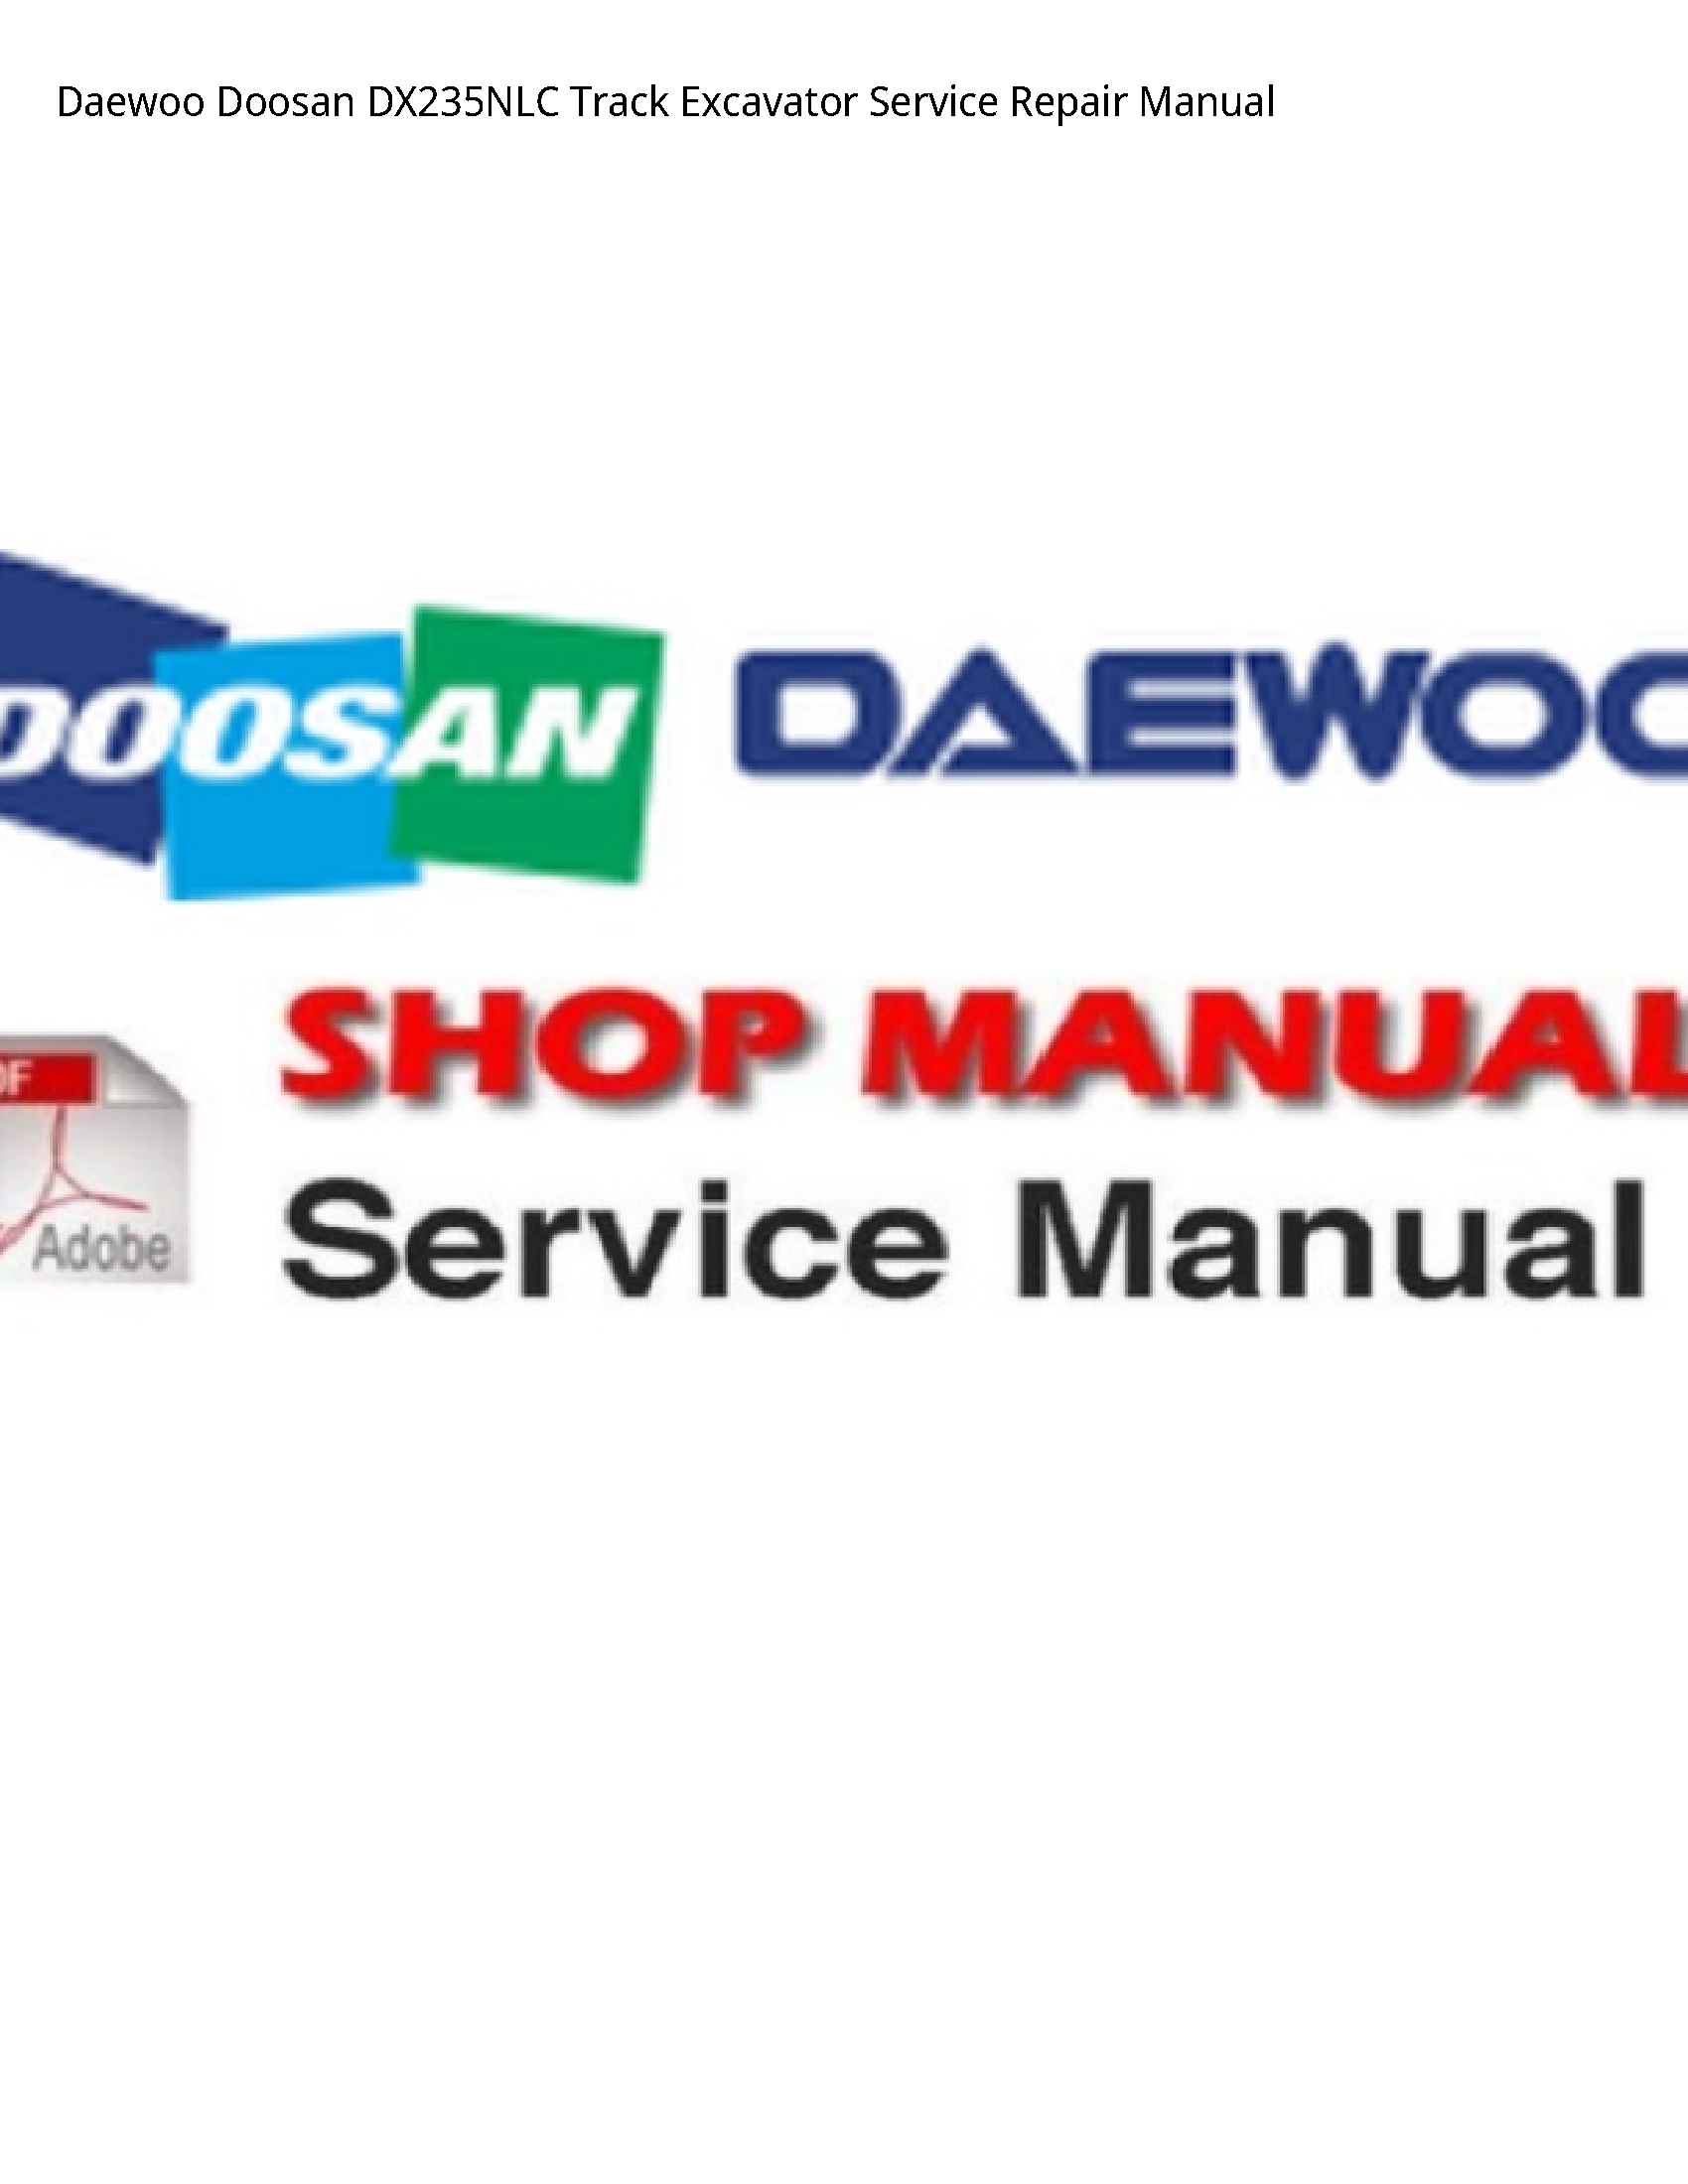 Daewoo Doosan DX235NLC Track Excavator manual